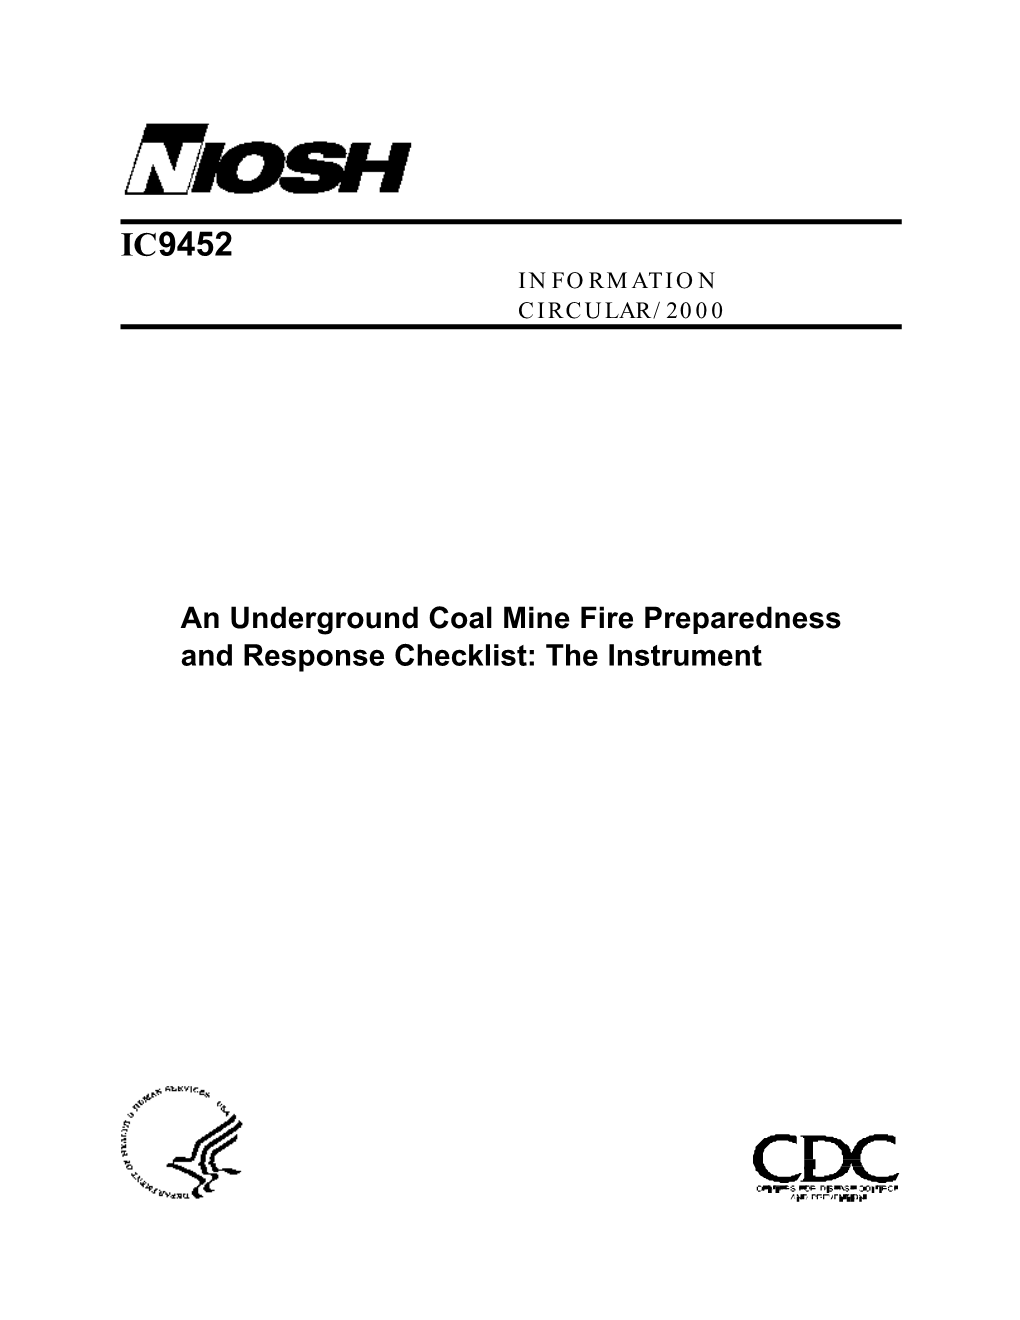 An Underground Coal Mine Fire Preparedness and Response Checklist: the Instrument U.S